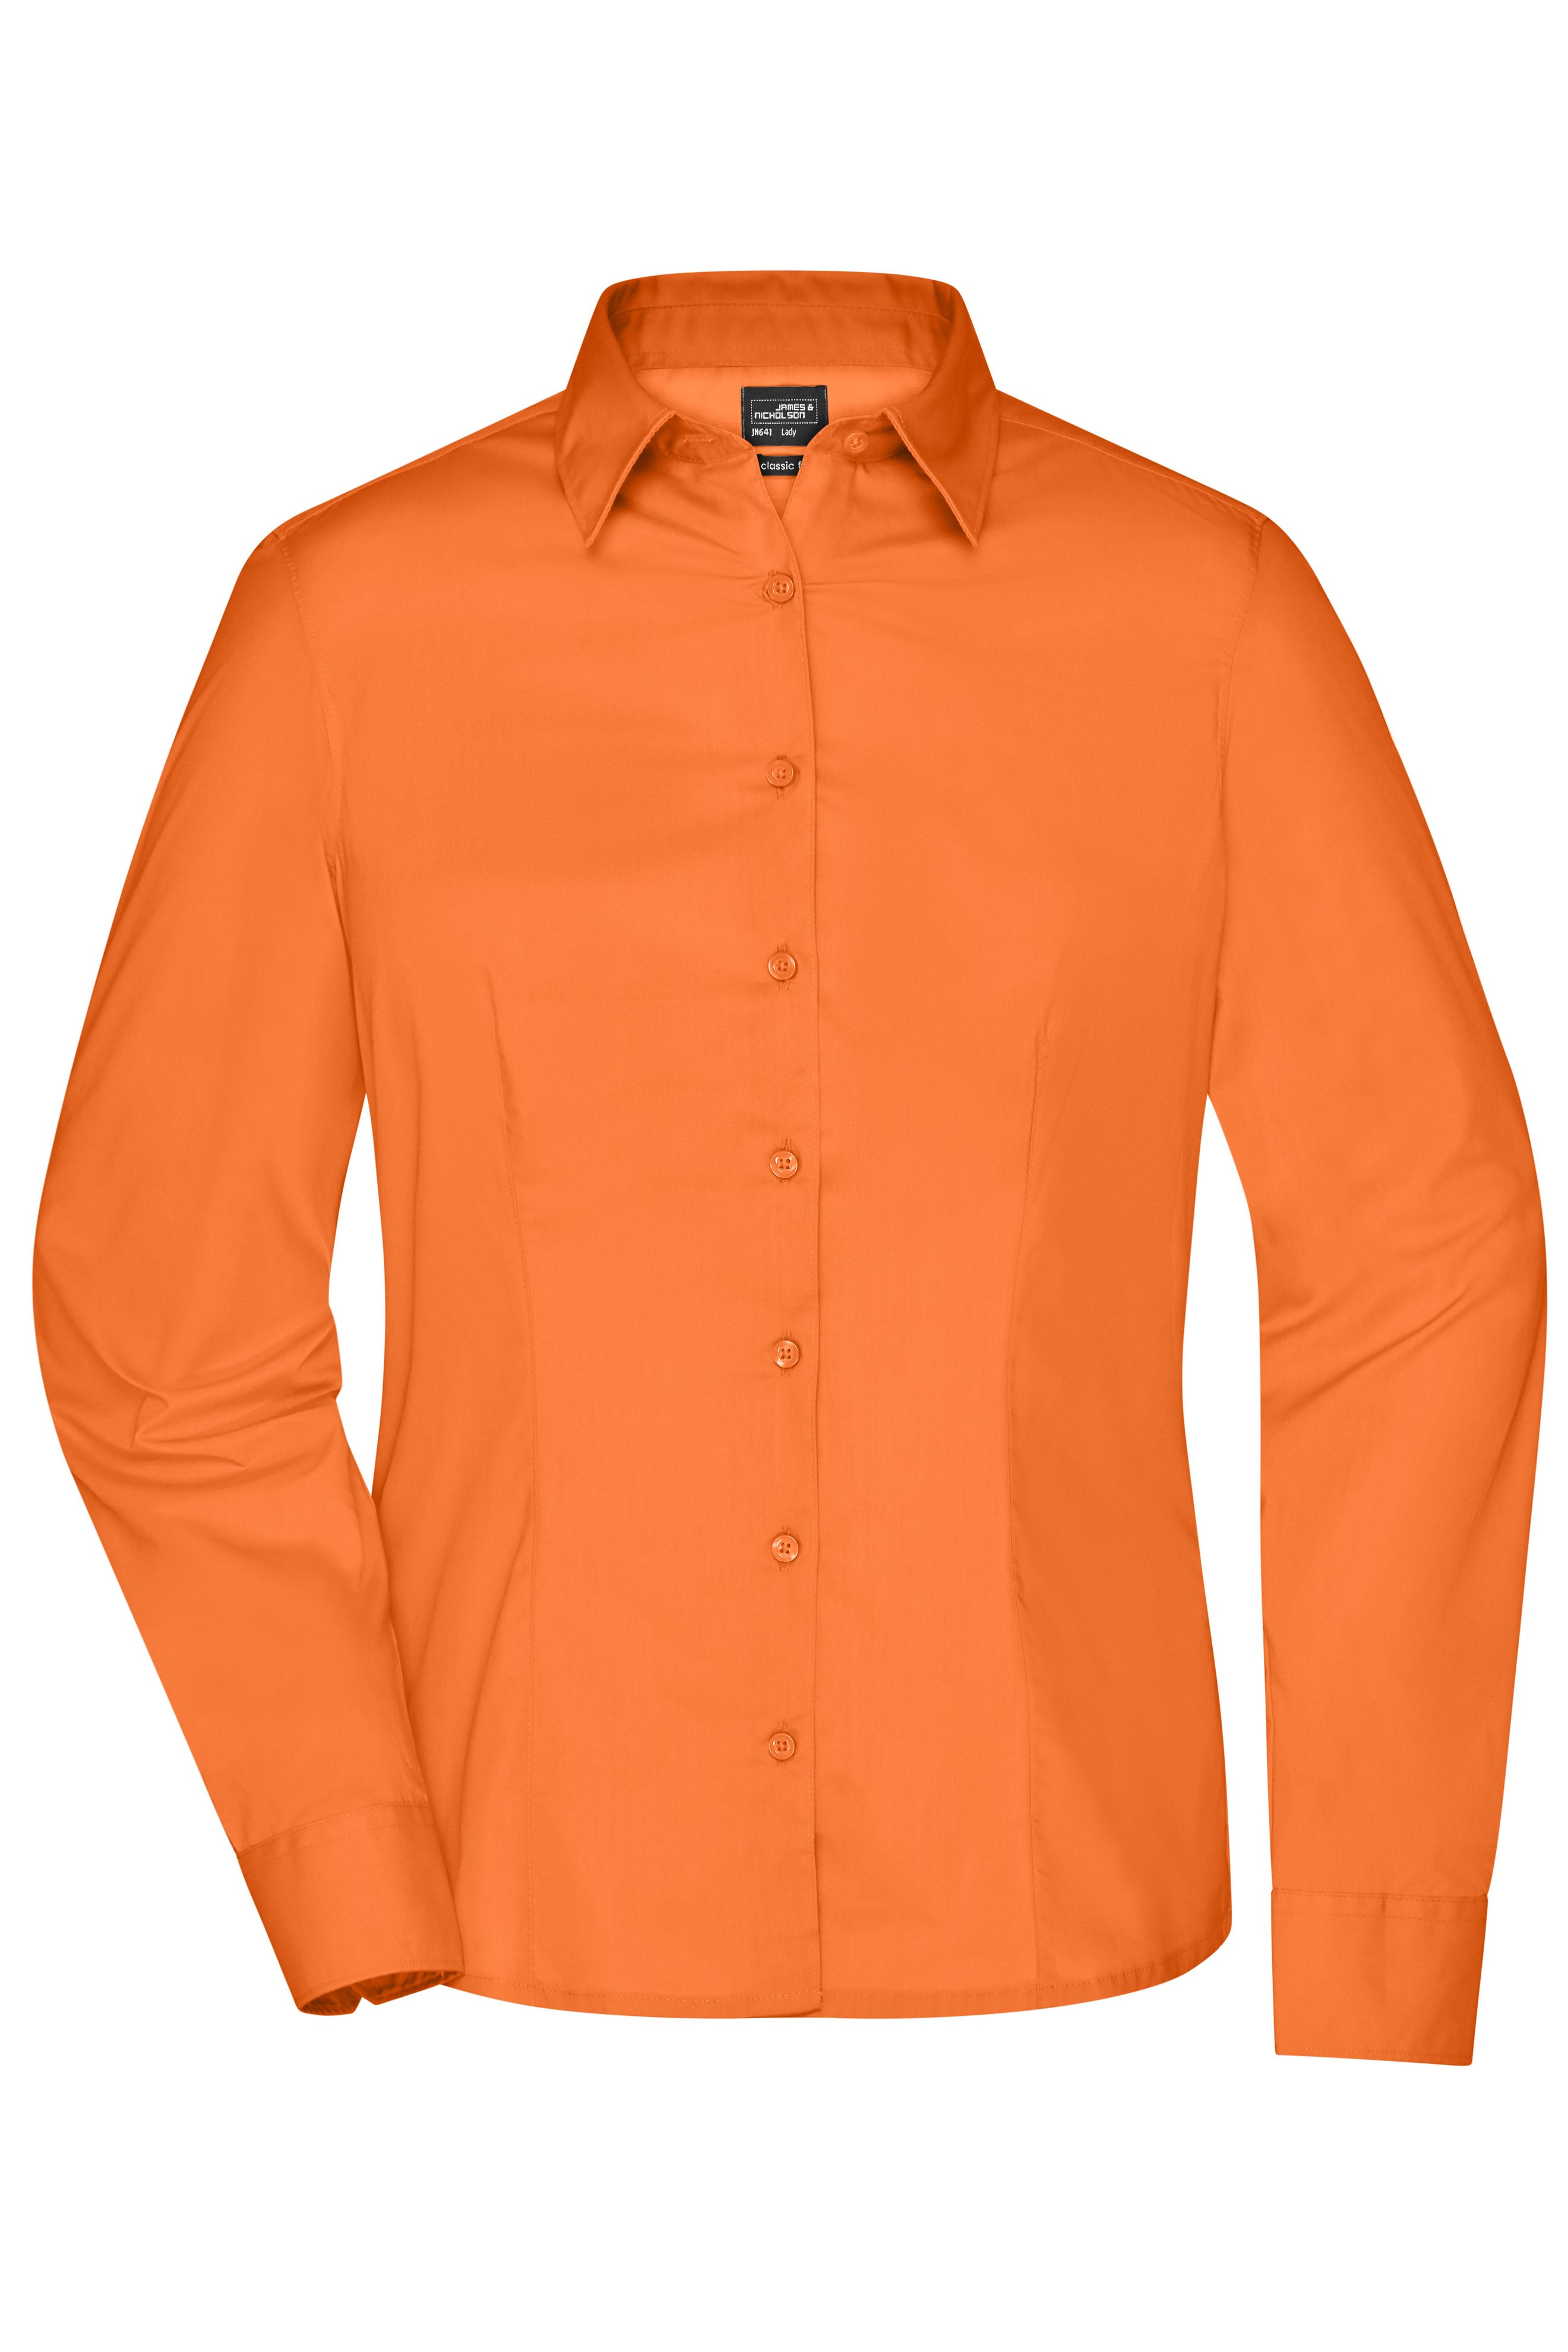 Ladies' Business Shirt Long-Sleeved JN641 Klassisches Shirt aus strapazierfähigem Mischgewebe